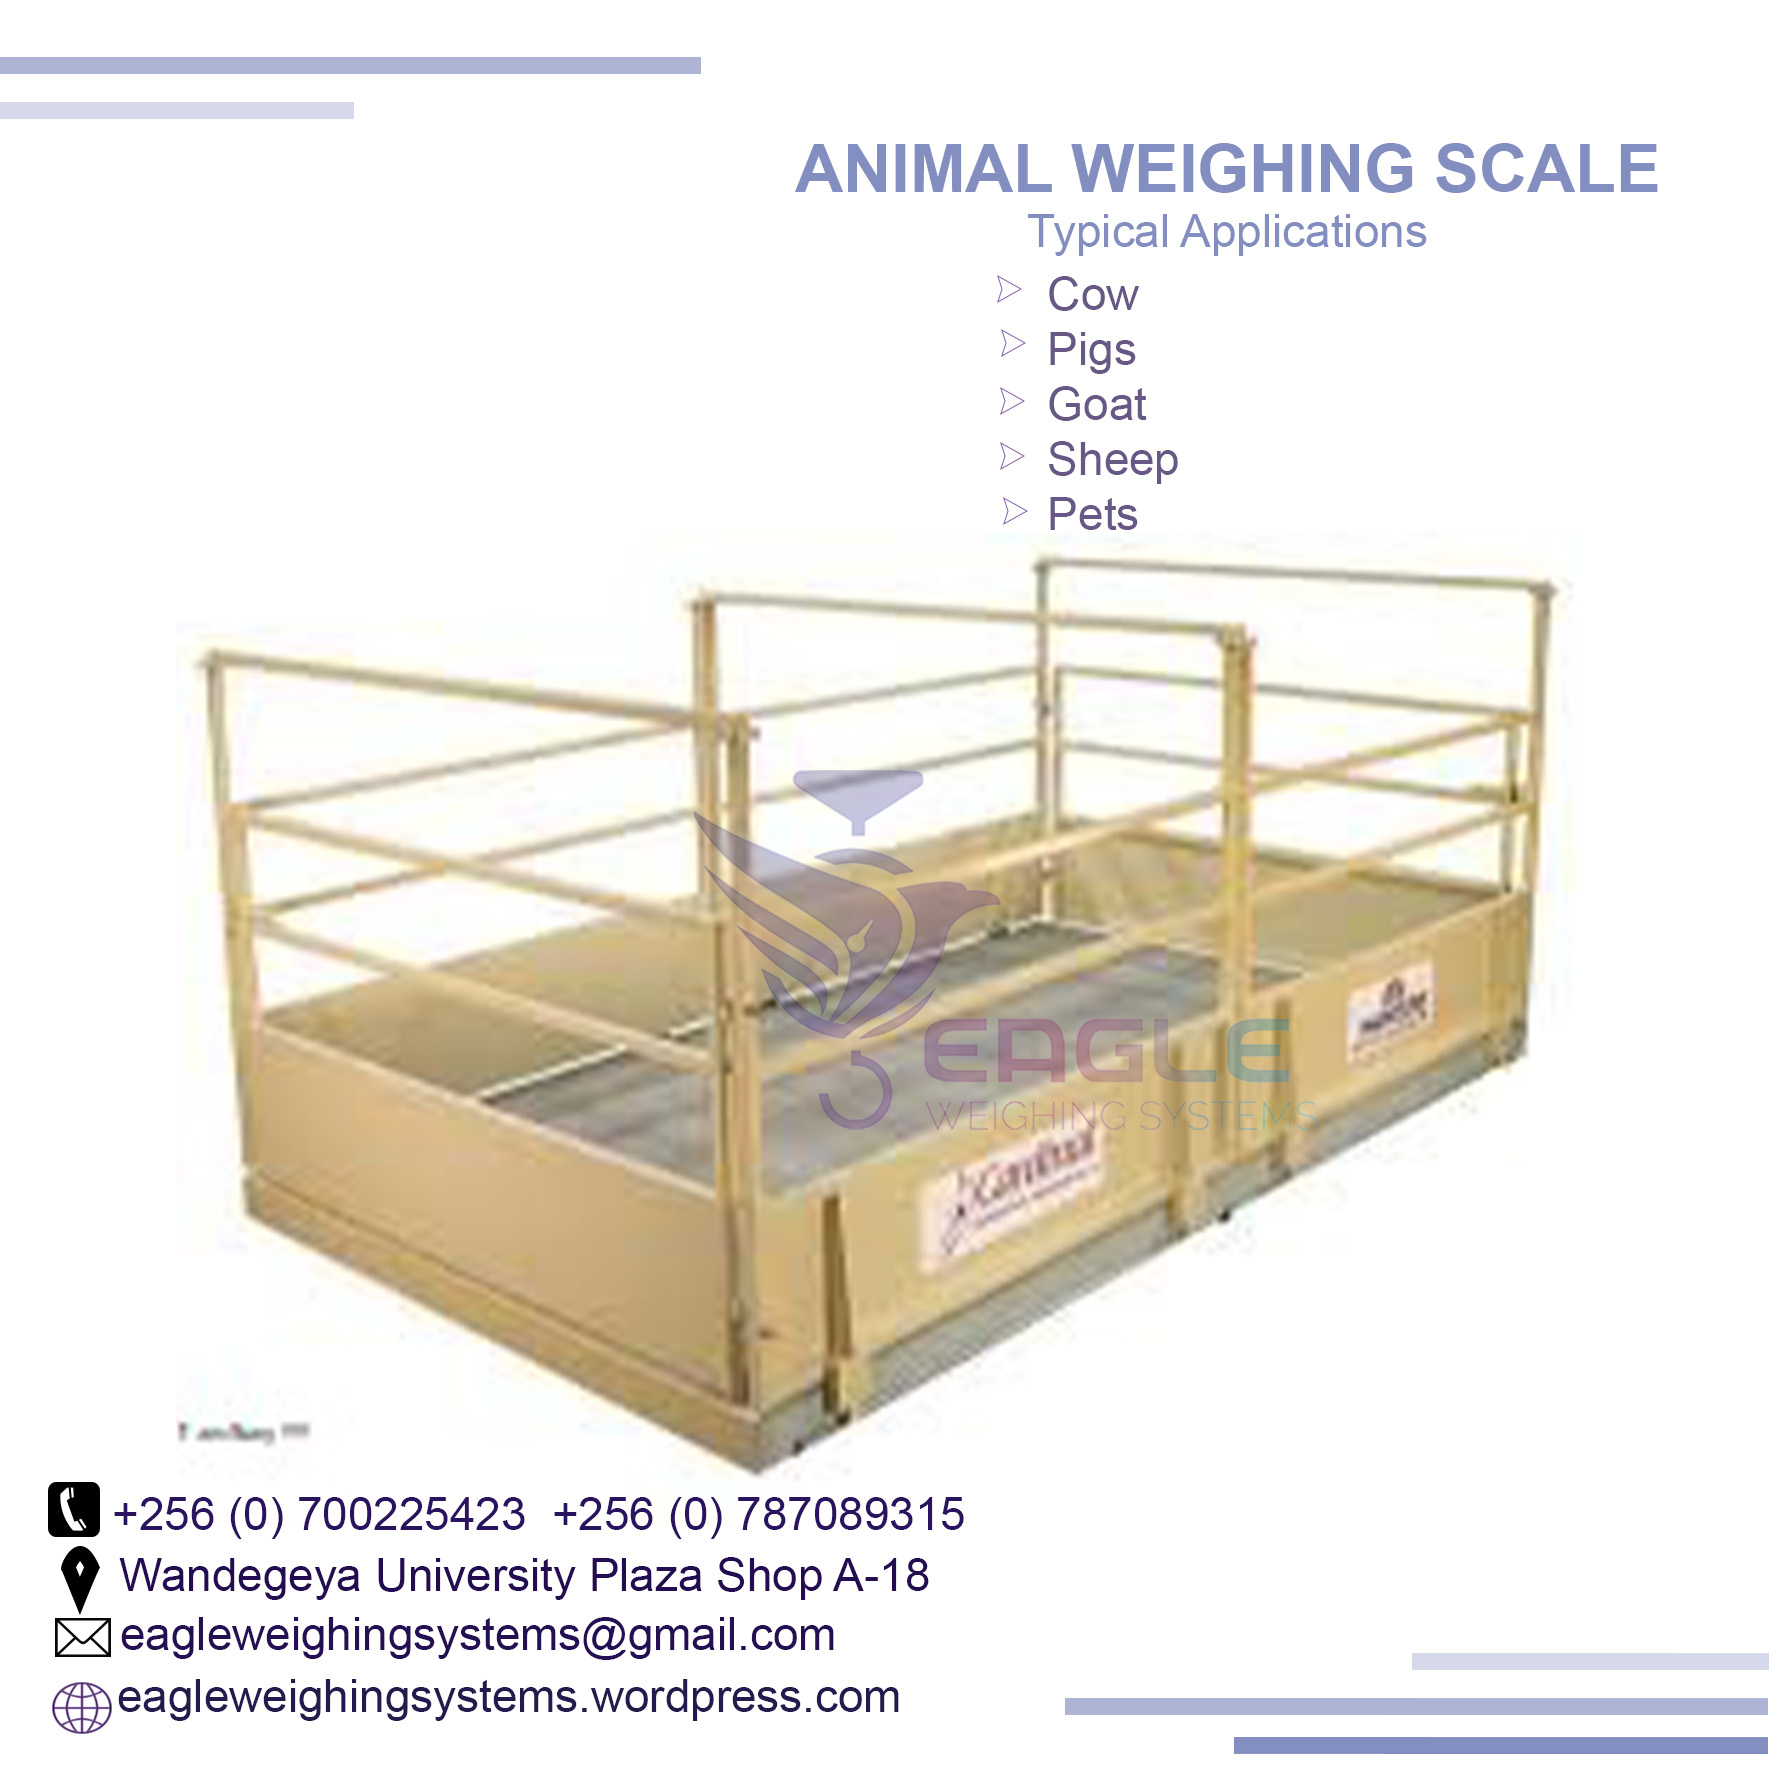 Platform animal weighing scales at Eagle Weighing Systems Kampala, Kampala Central Division, Central, Uganda